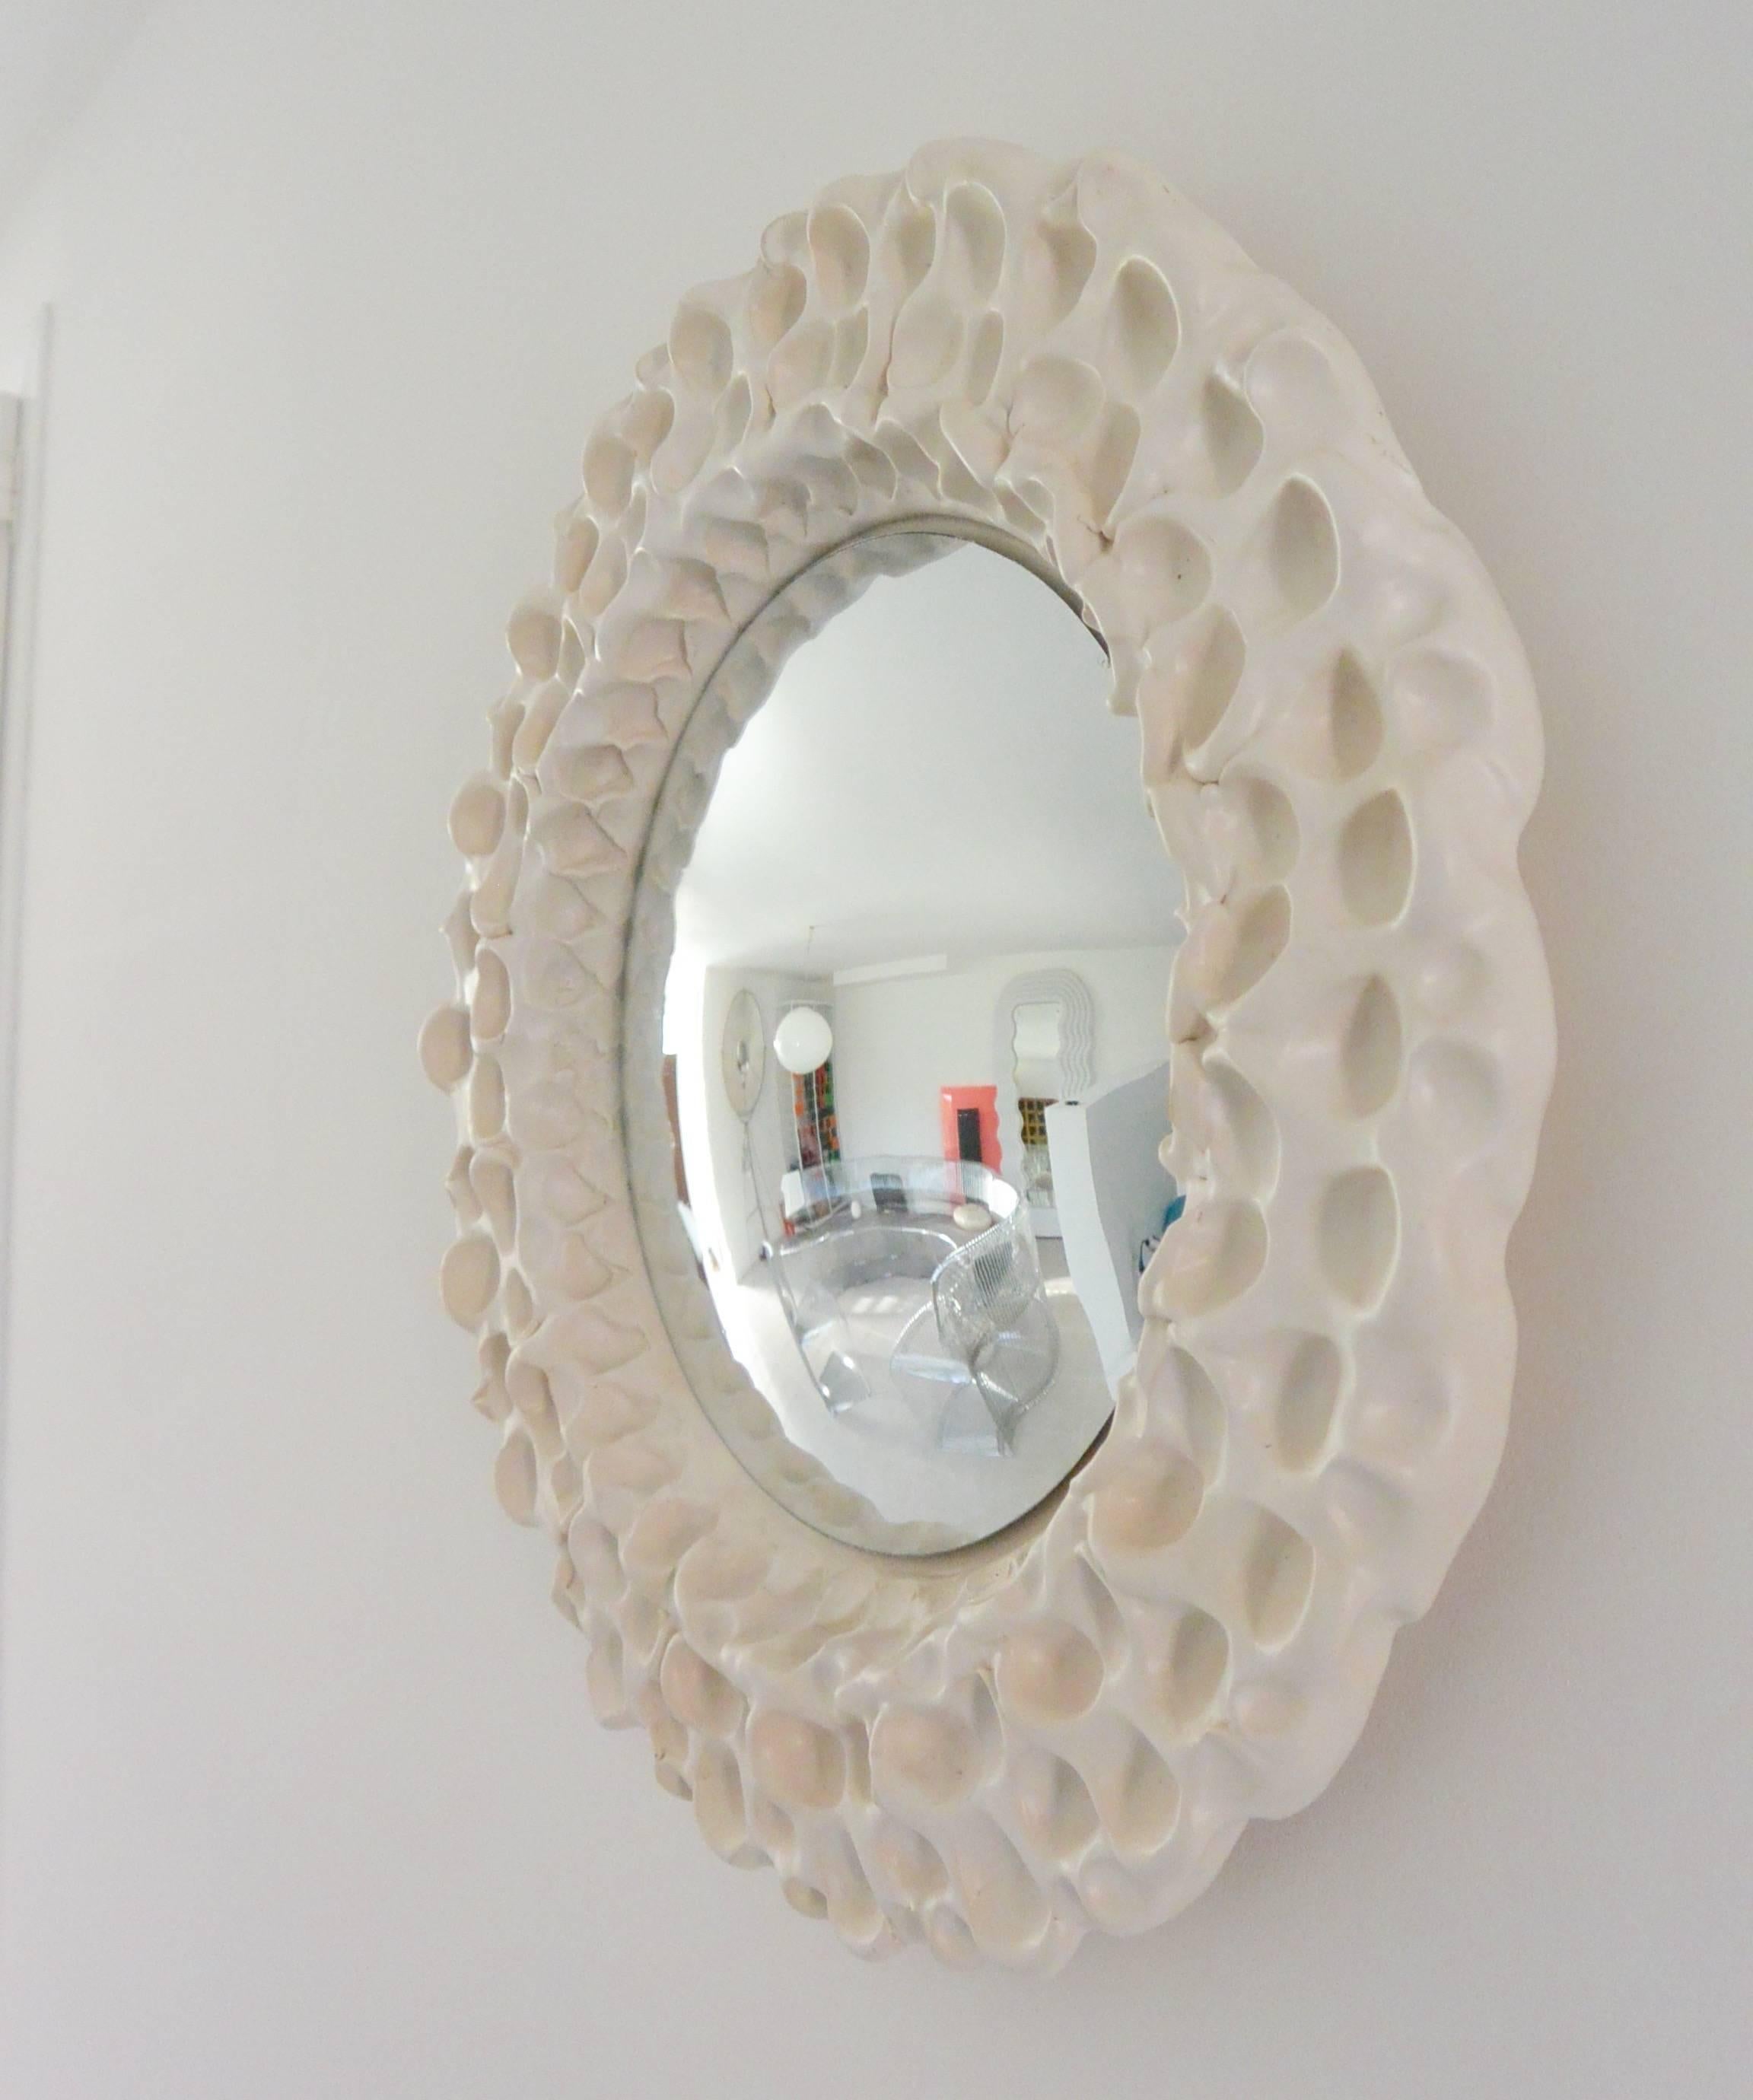 Beautiful convex mirror by the Atelier Buffile in white glazed ceramic,
circa 1980.

Measures: Diameter 43cm.
 